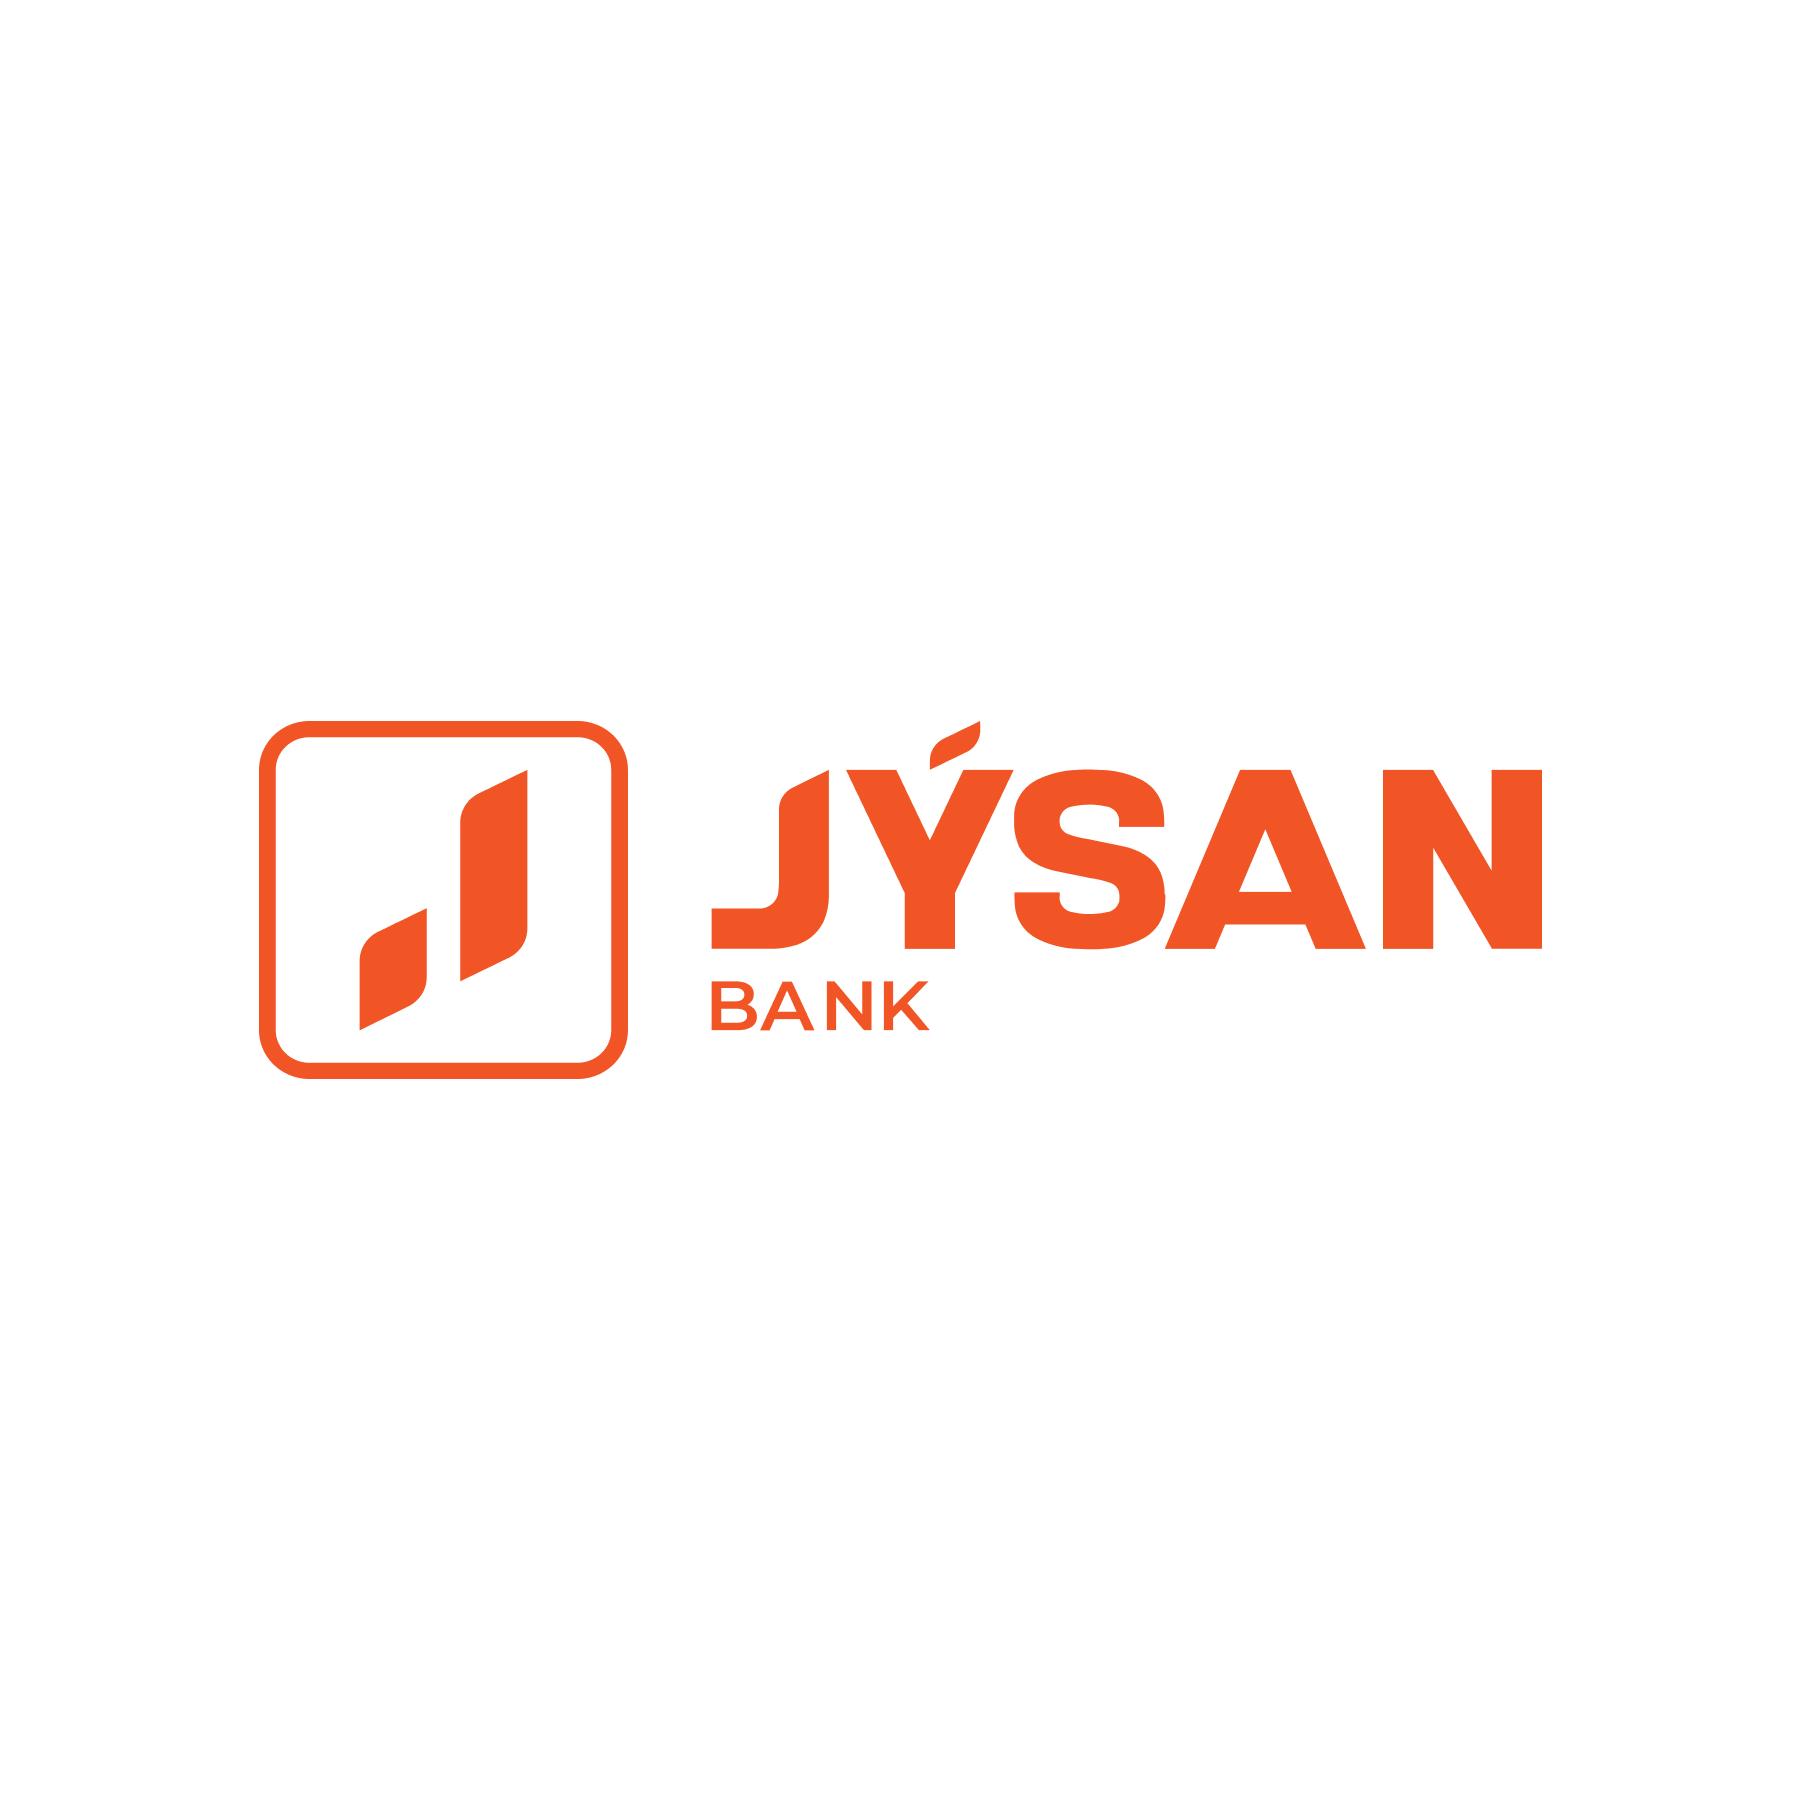 Джусан бизнес. Жусан банк. Логотип Жусан банка. Jusan банк логотип. First Heartland Jusan Bank.